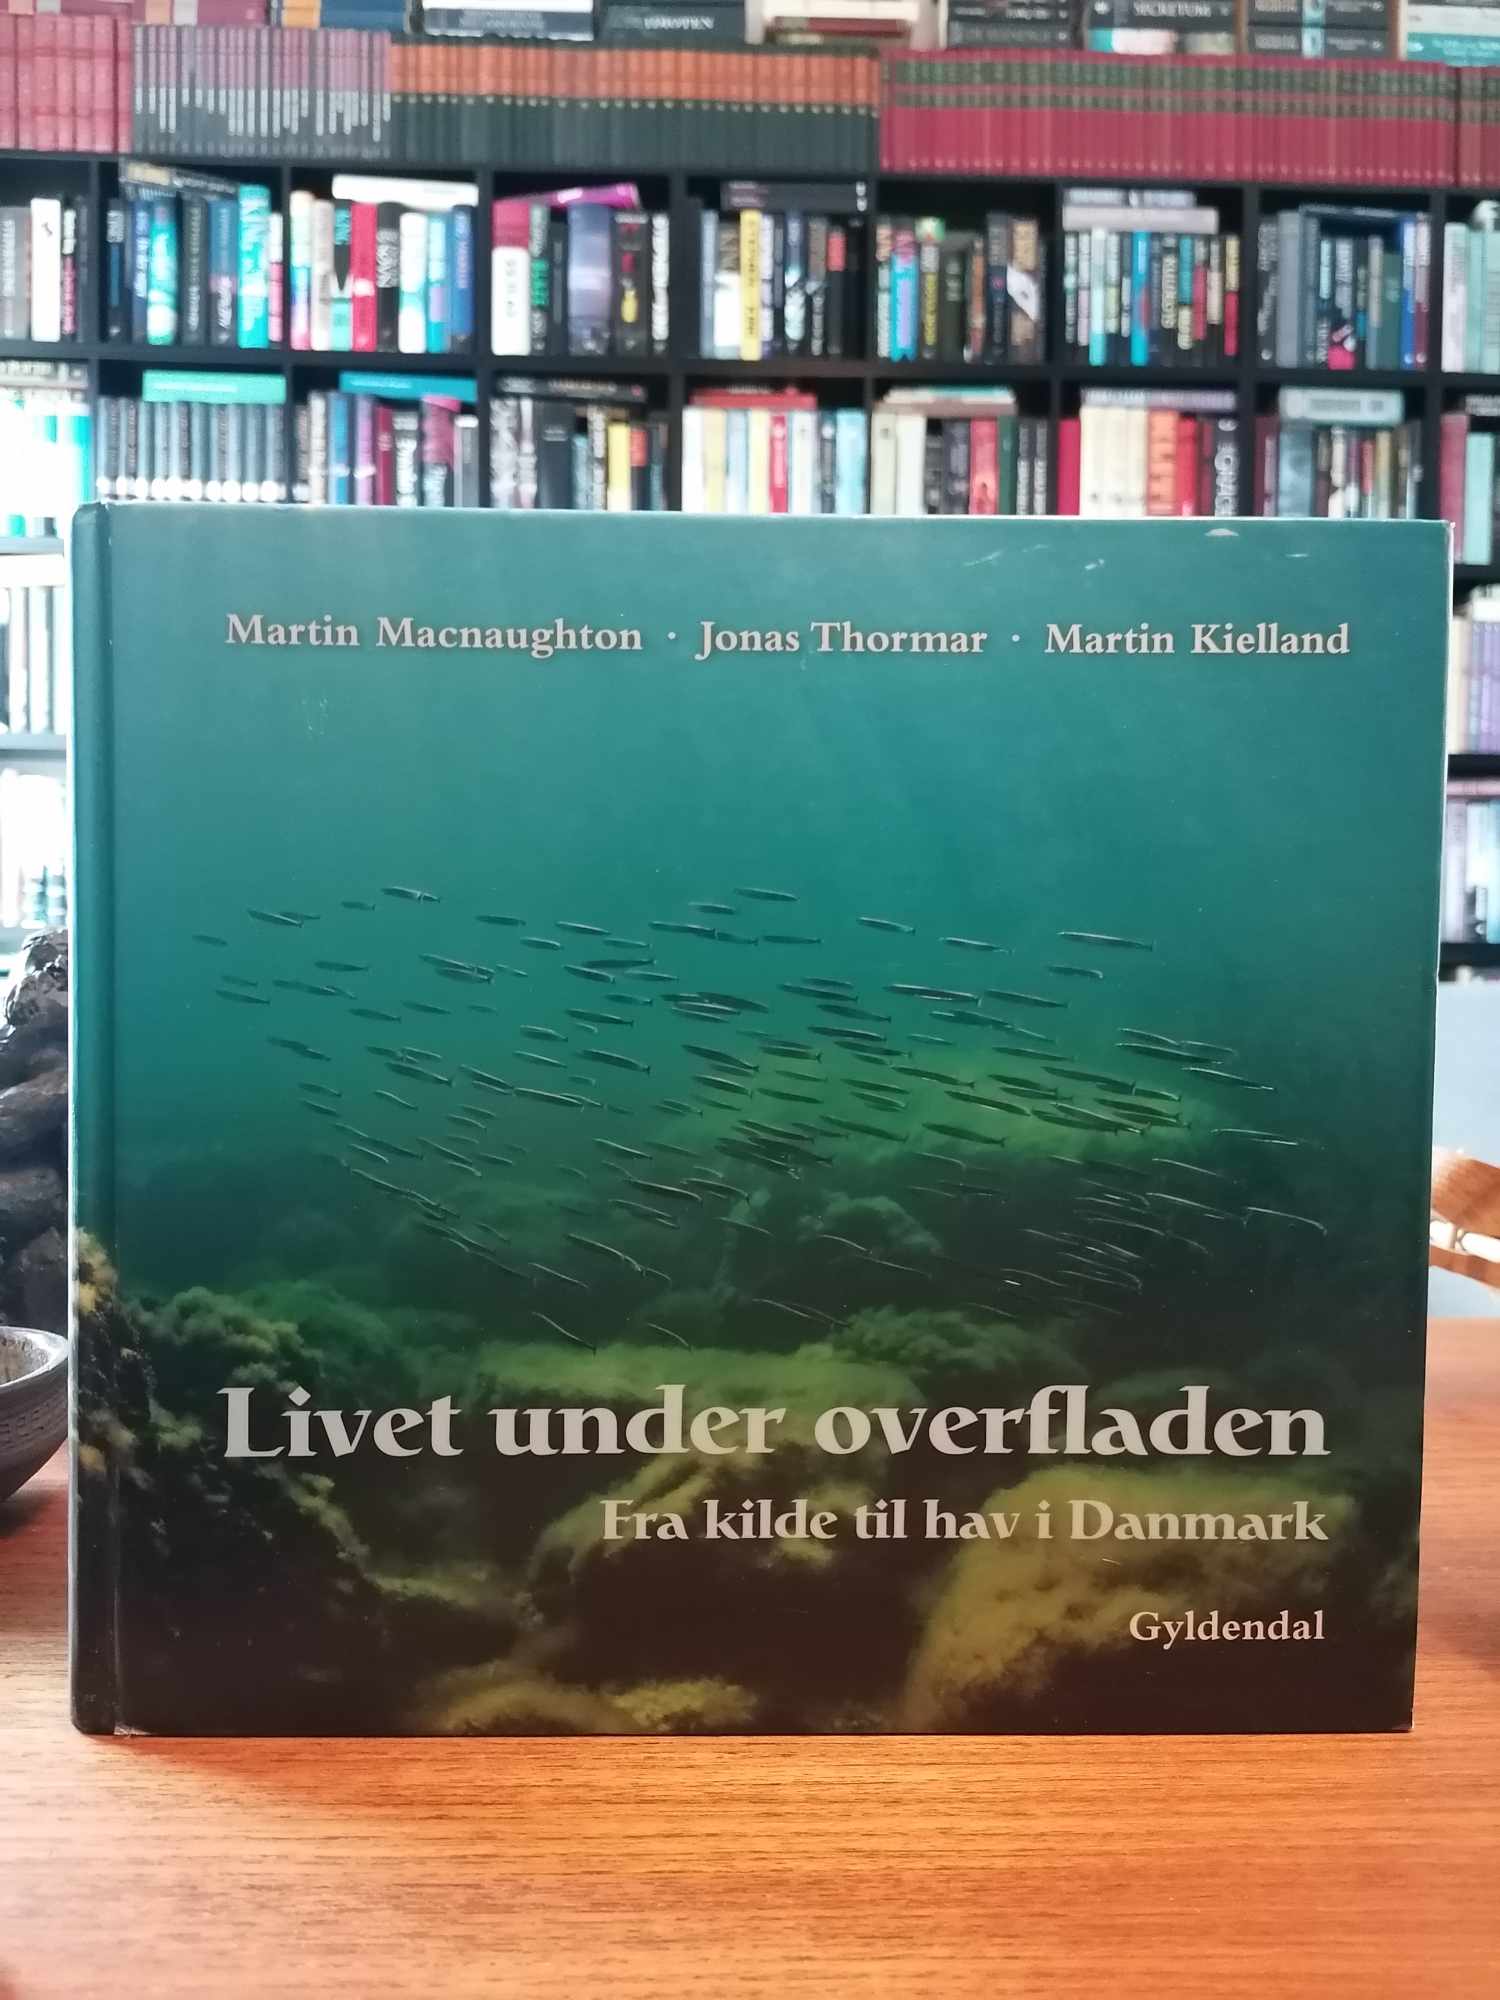 "Livet under overfladen - fra kilde til hav i Danmark" af     Jonas Thormar, Martin Macnaughton & Martin Kielland